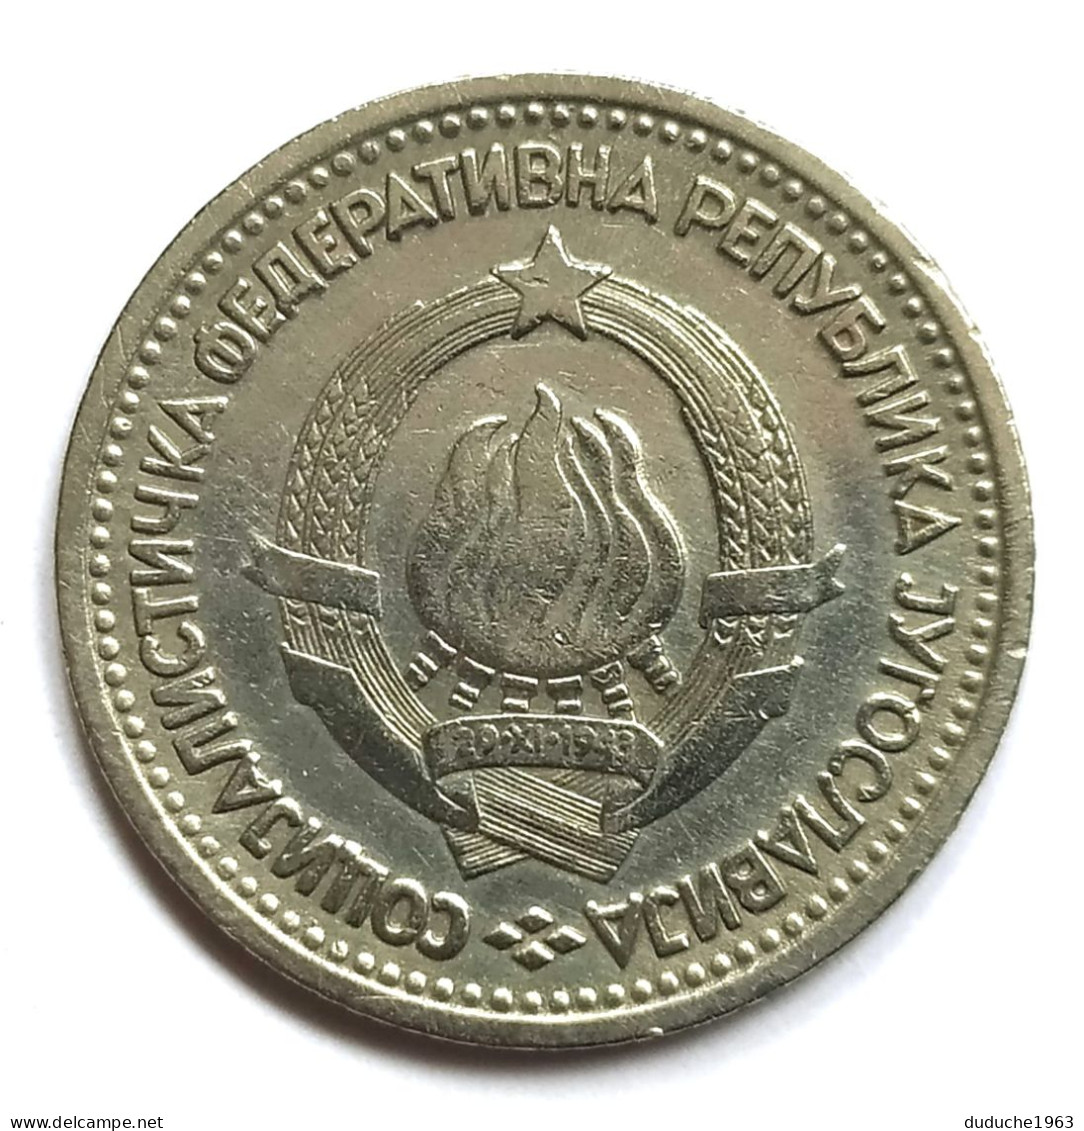 Yougoslavie - 1 Dinar 1965 - Yougoslavie